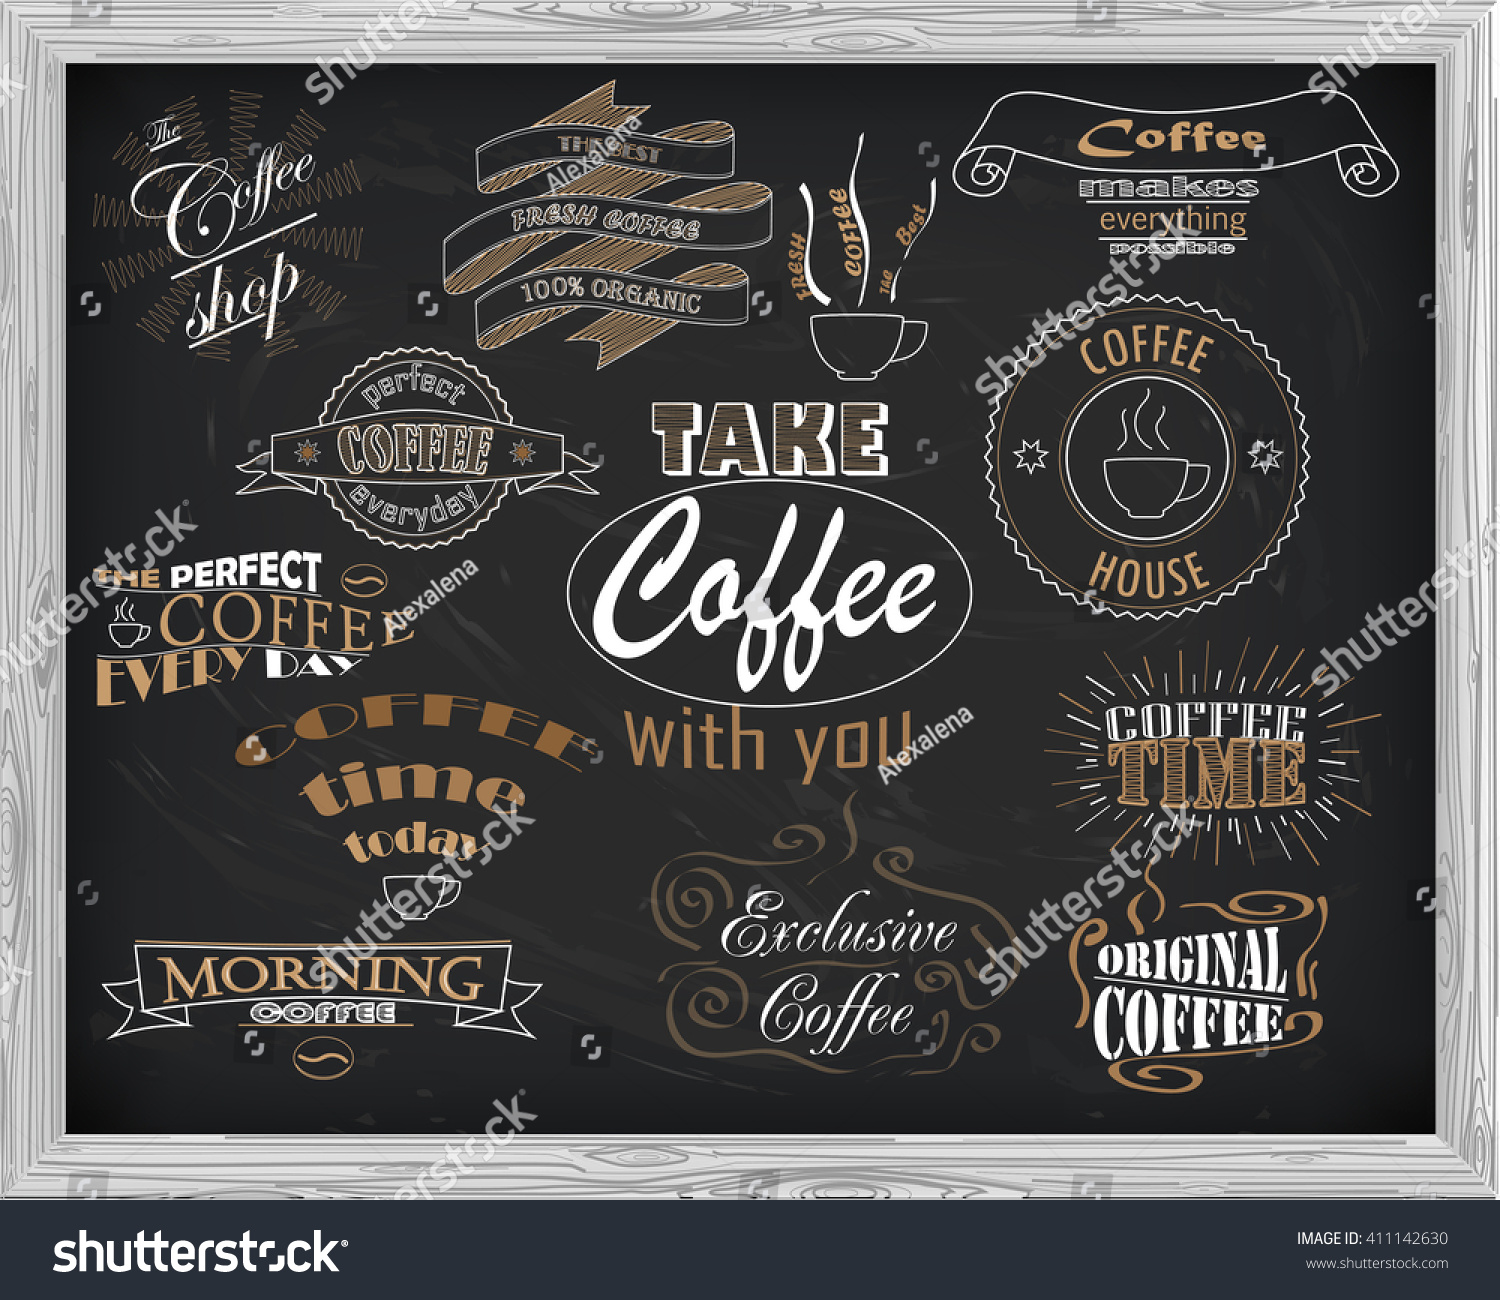 Edit Vectors Free Online - Coffee shop | Shutterstock Editor